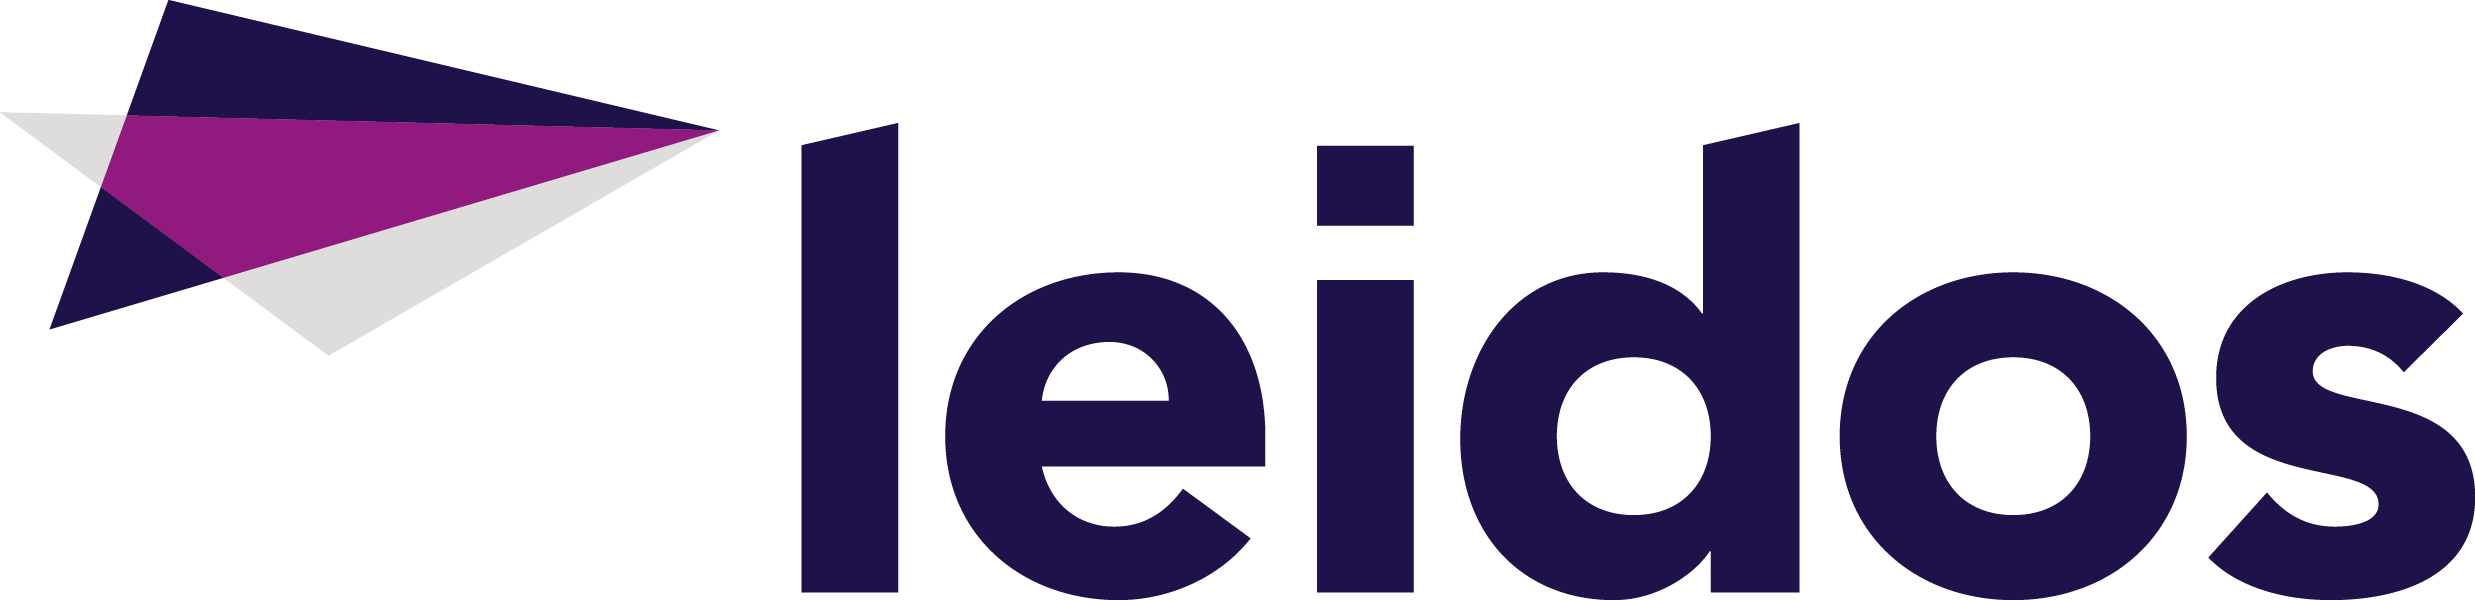 sponsor logo 3